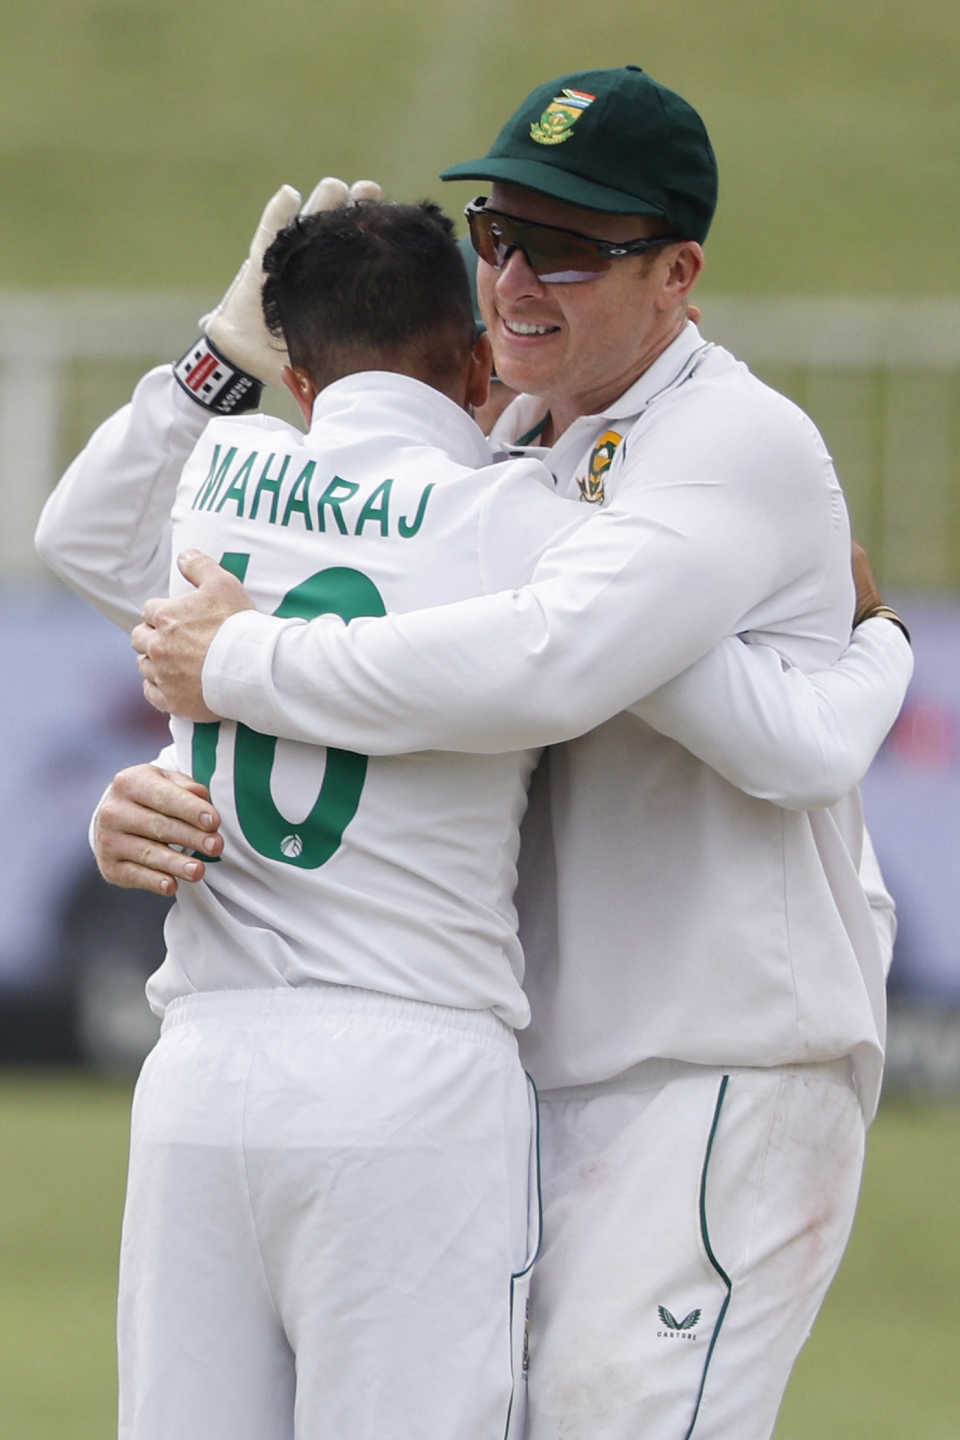 Keshav Maharaj and Simon Harmer celebrate a wicket